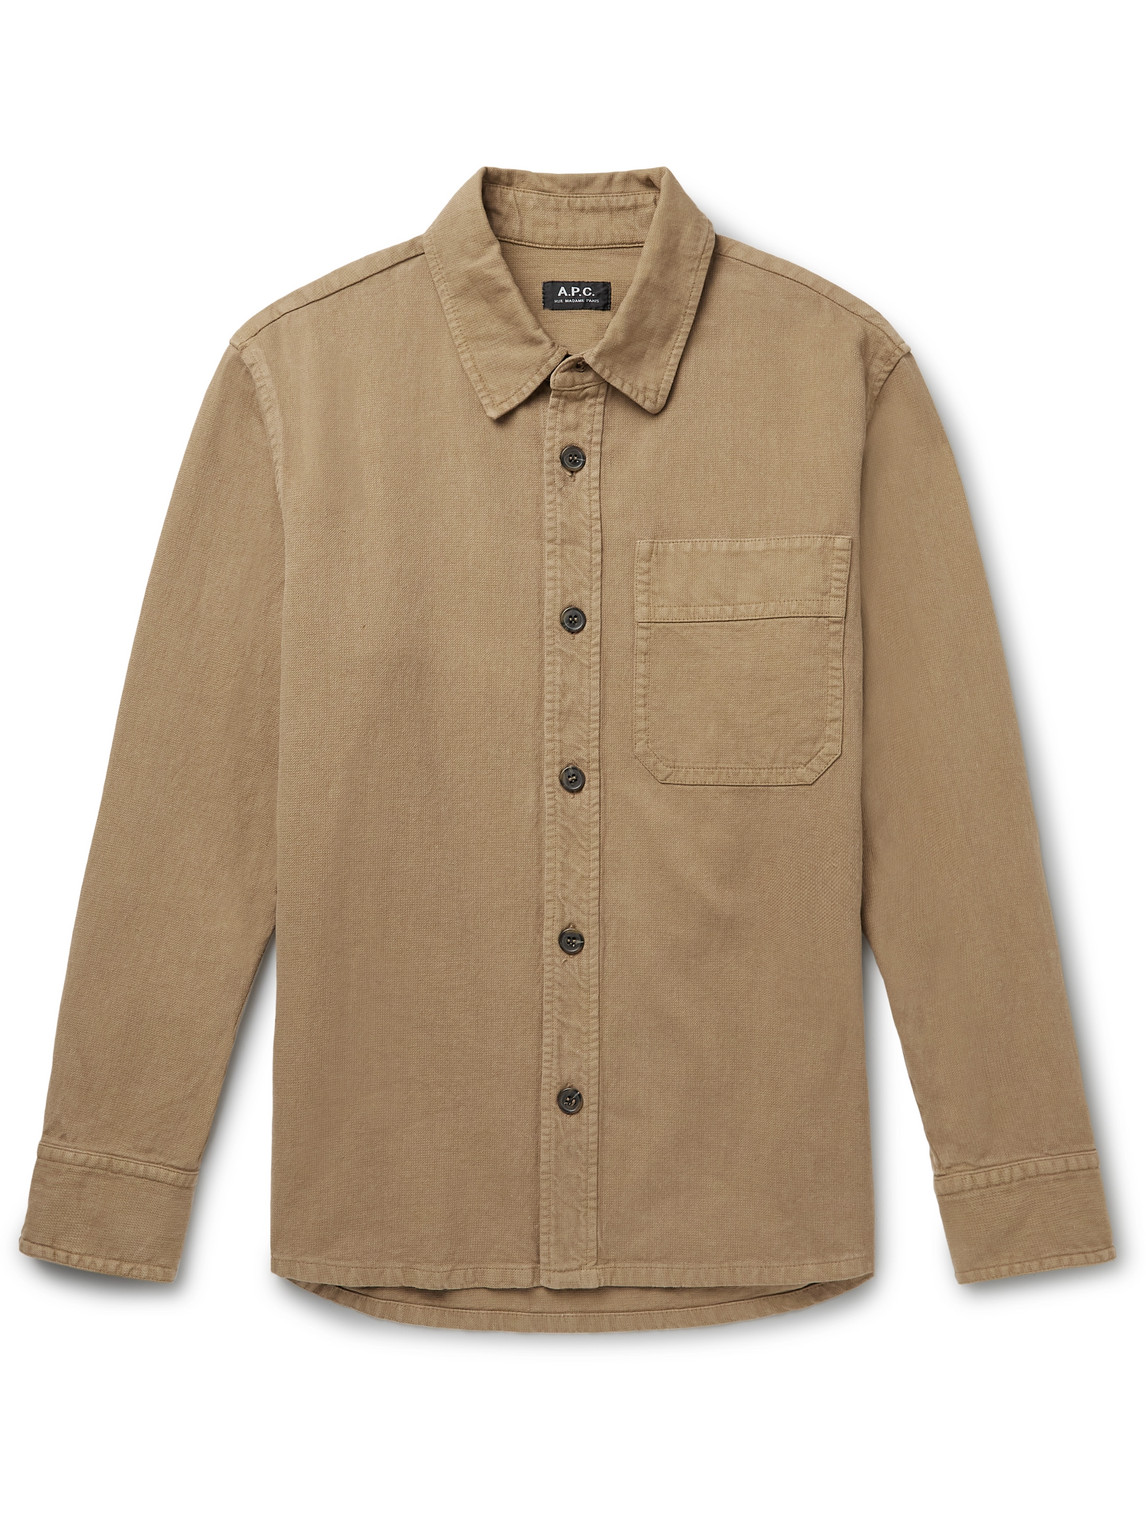 A.P.C. Basile Slim-Fit Cotton and Linen-Blend Overshirt